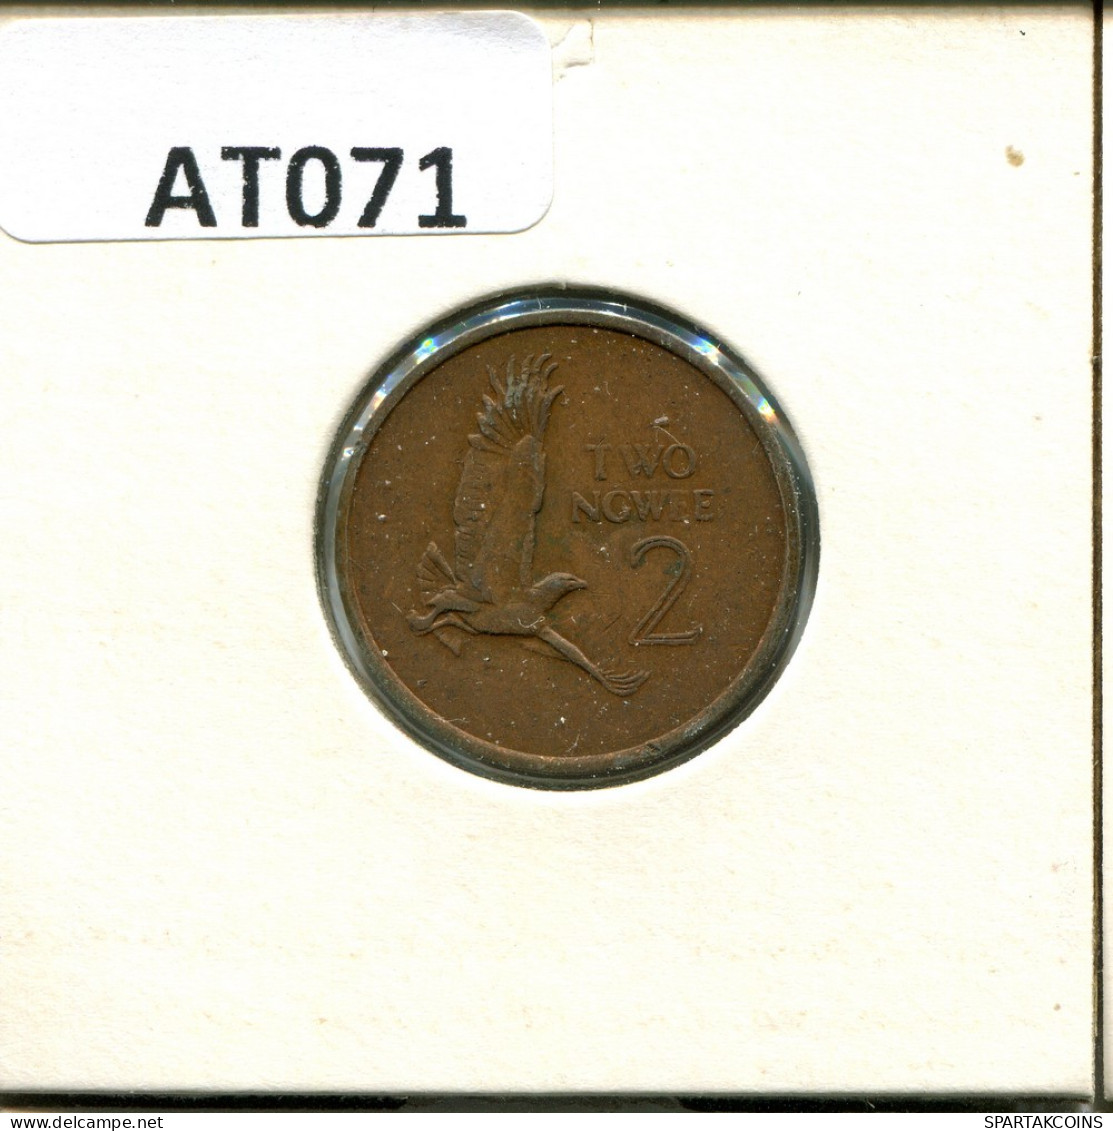 2 NGWEE 1982 ZAMBIA Coin #AT071.U - Zambie